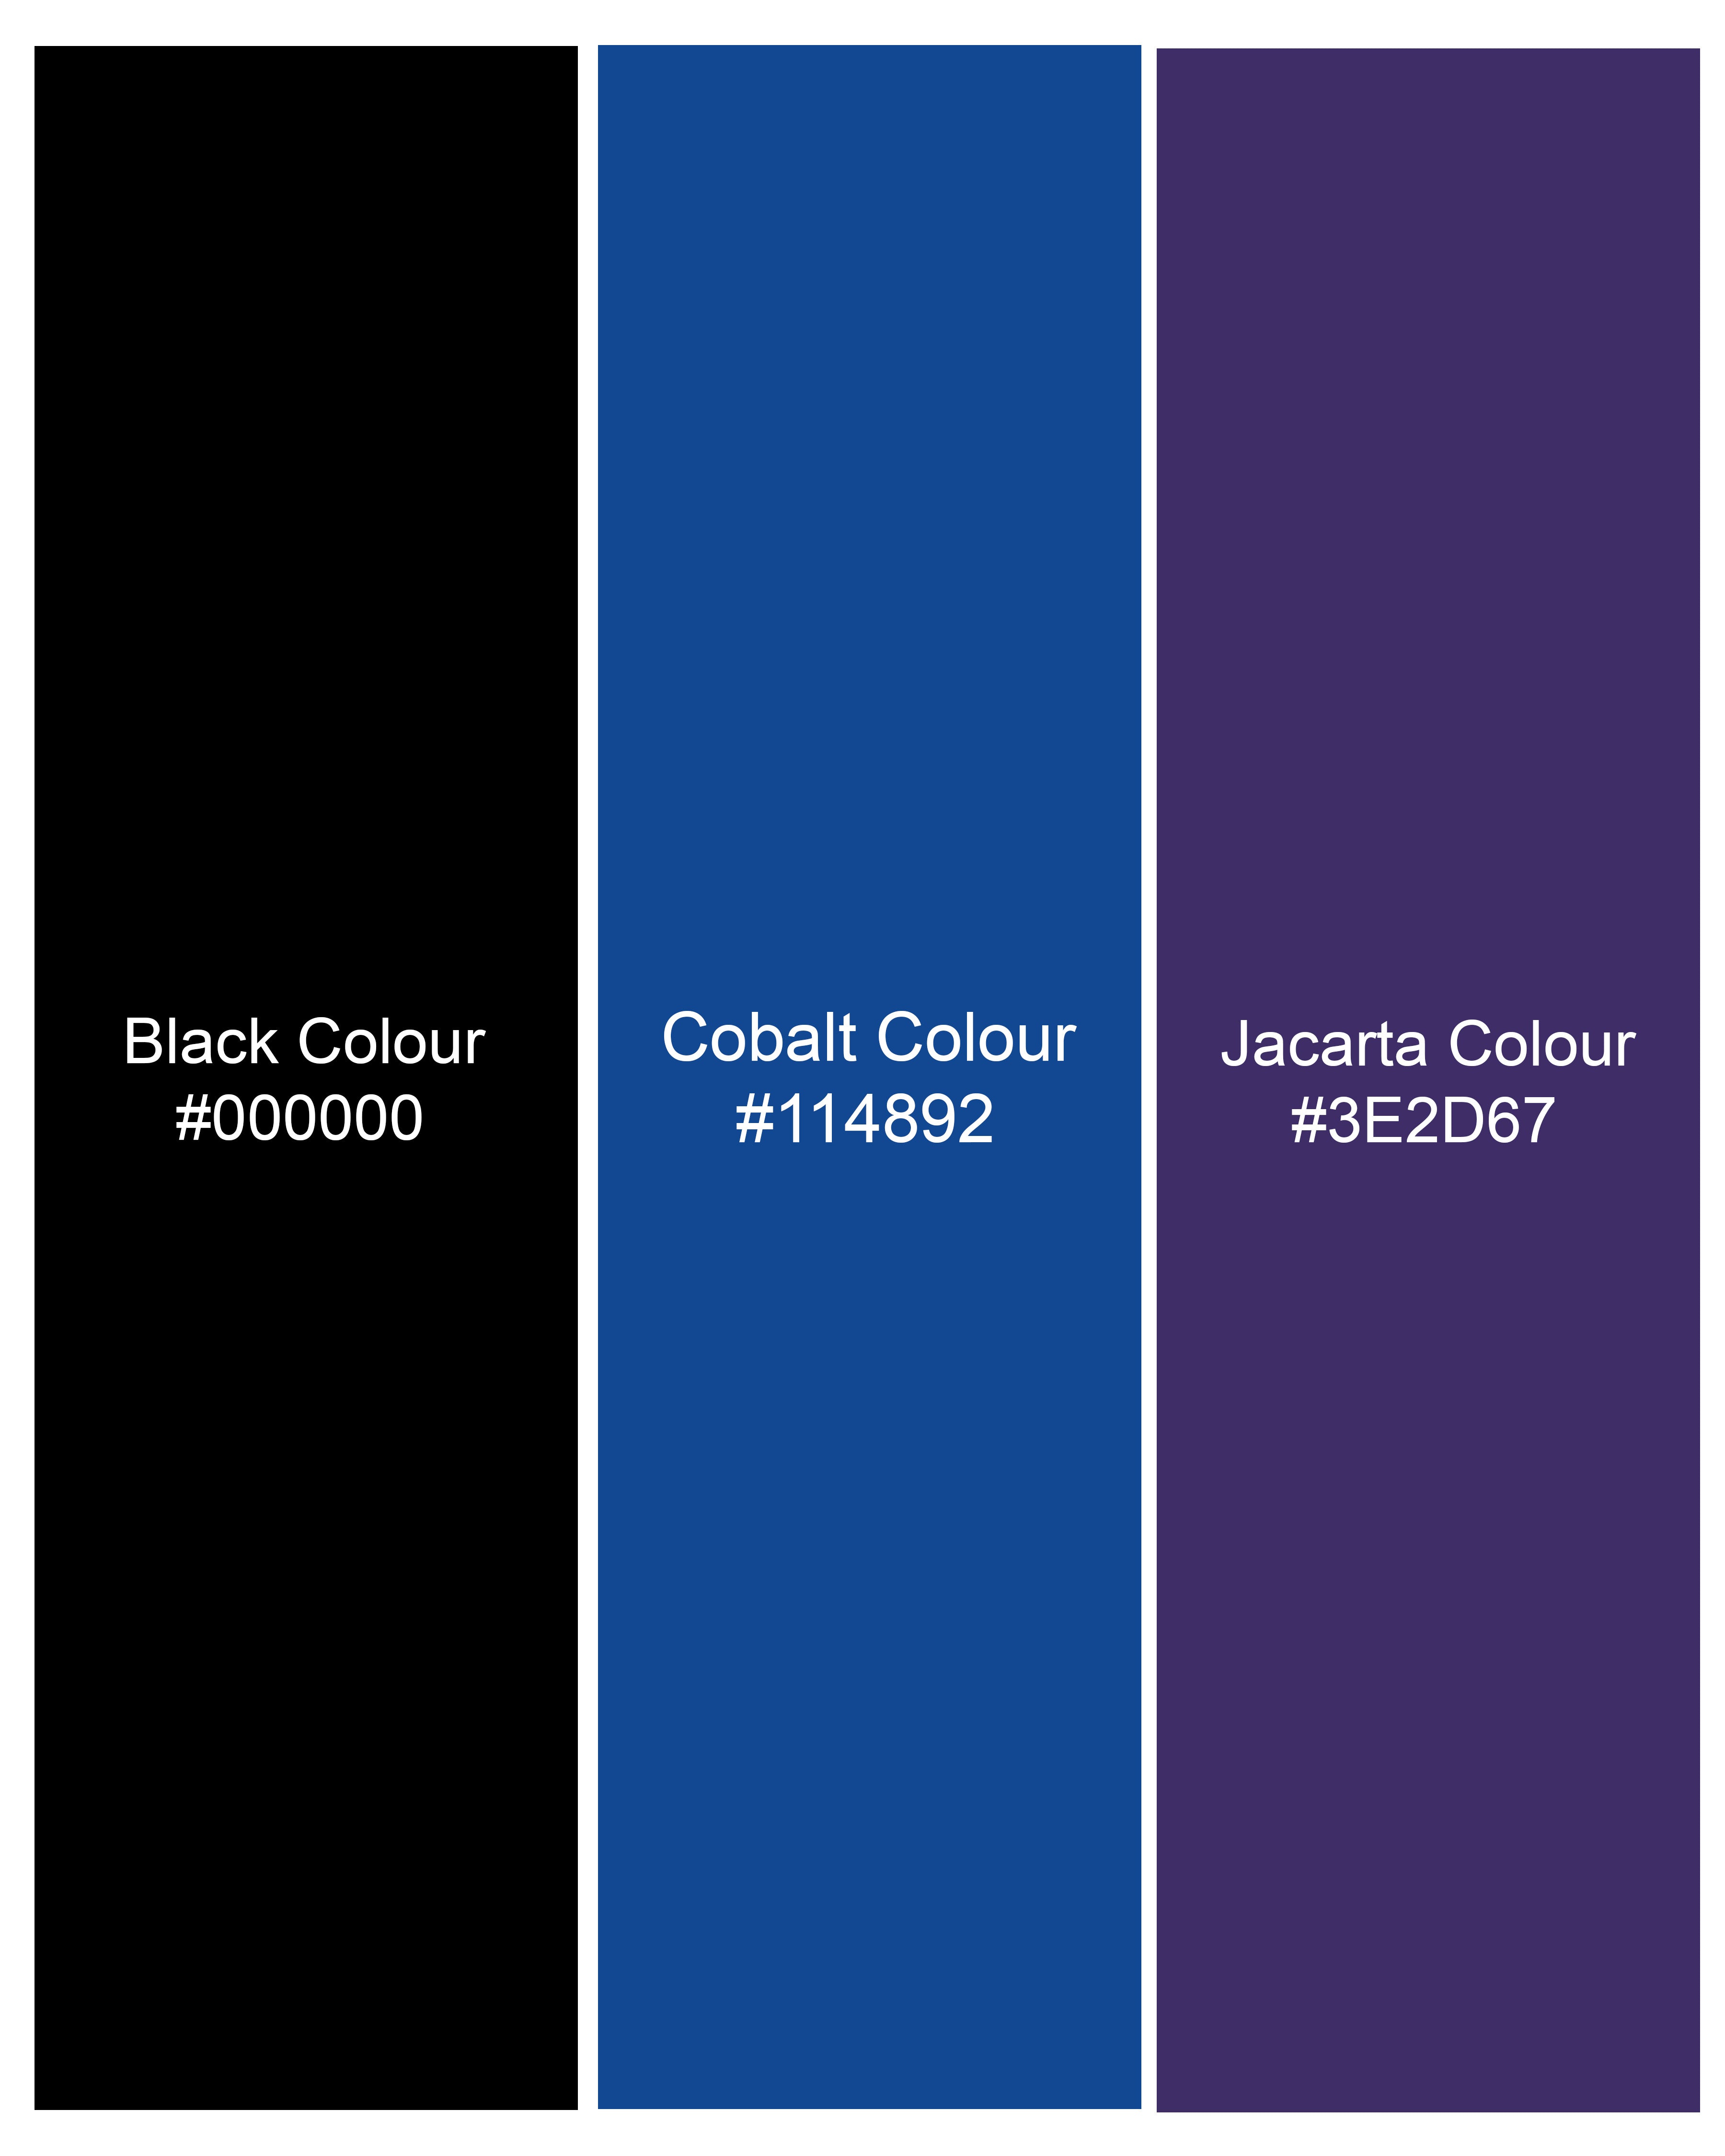 Cobalt Blue and Black Twill Pinstripe Premium Cotton Shirt 9886-BLK-38, 9886-BLK-H-38, 9886-BLK-39, 9886-BLK-H-39, 9886-BLK-40, 9886-BLK-H-40, 9886-BLK-42, 9886-BLK-H-42, 9886-BLK-44, 9886-BLK-H-44, 9886-BLK-46, 9886-BLK-H-46, 9886-BLK-48, 9886-BLK-H-48, 9886-BLK-50, 9886-BLK-H-50, 9886-BLK-52, 9886-BLK-H-52